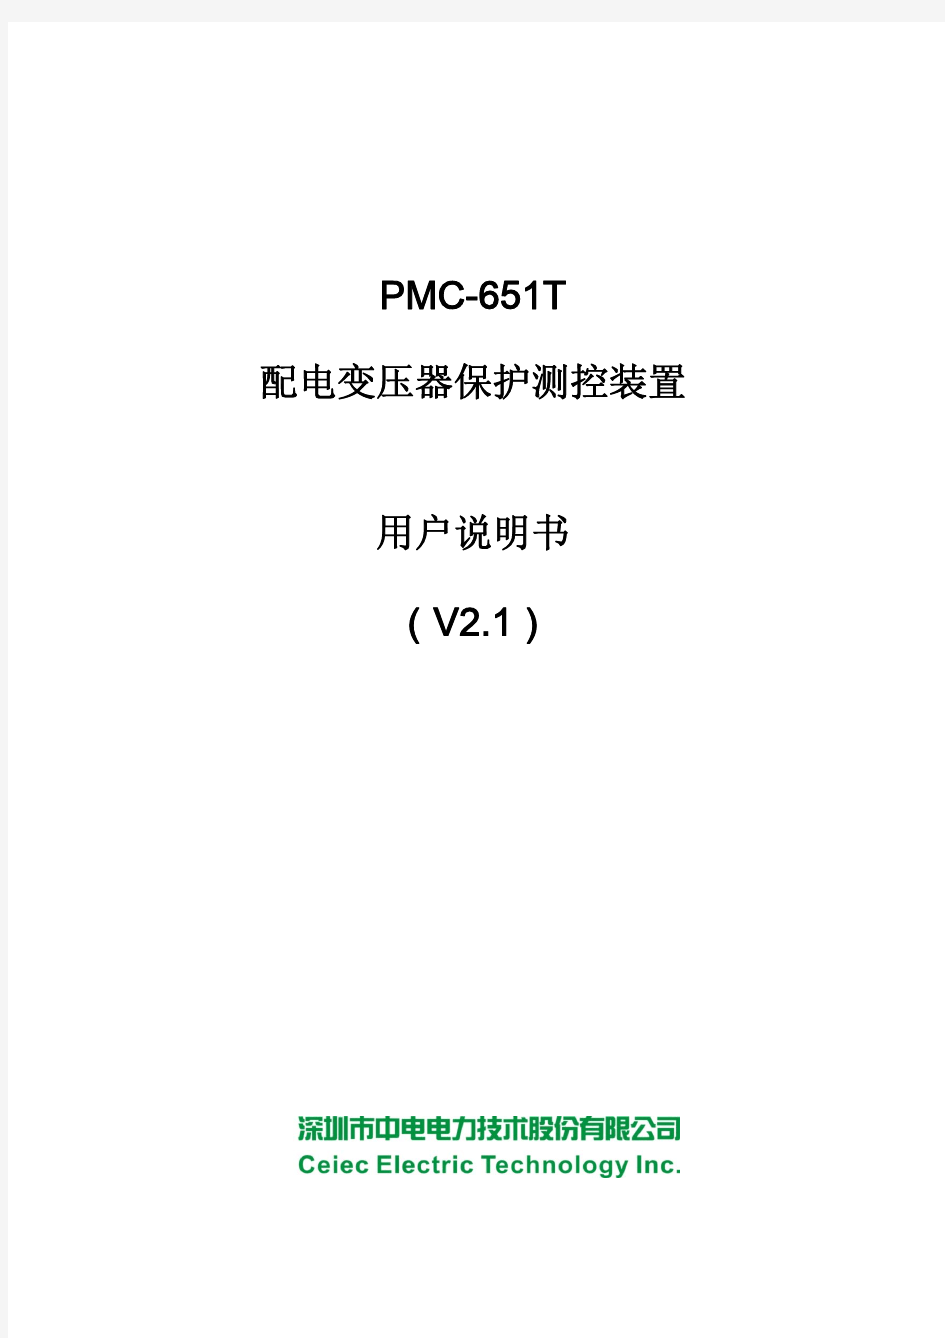 PMC-651T 配电变压器保护测控装置使用说明书_V2.1_20130326 (2)